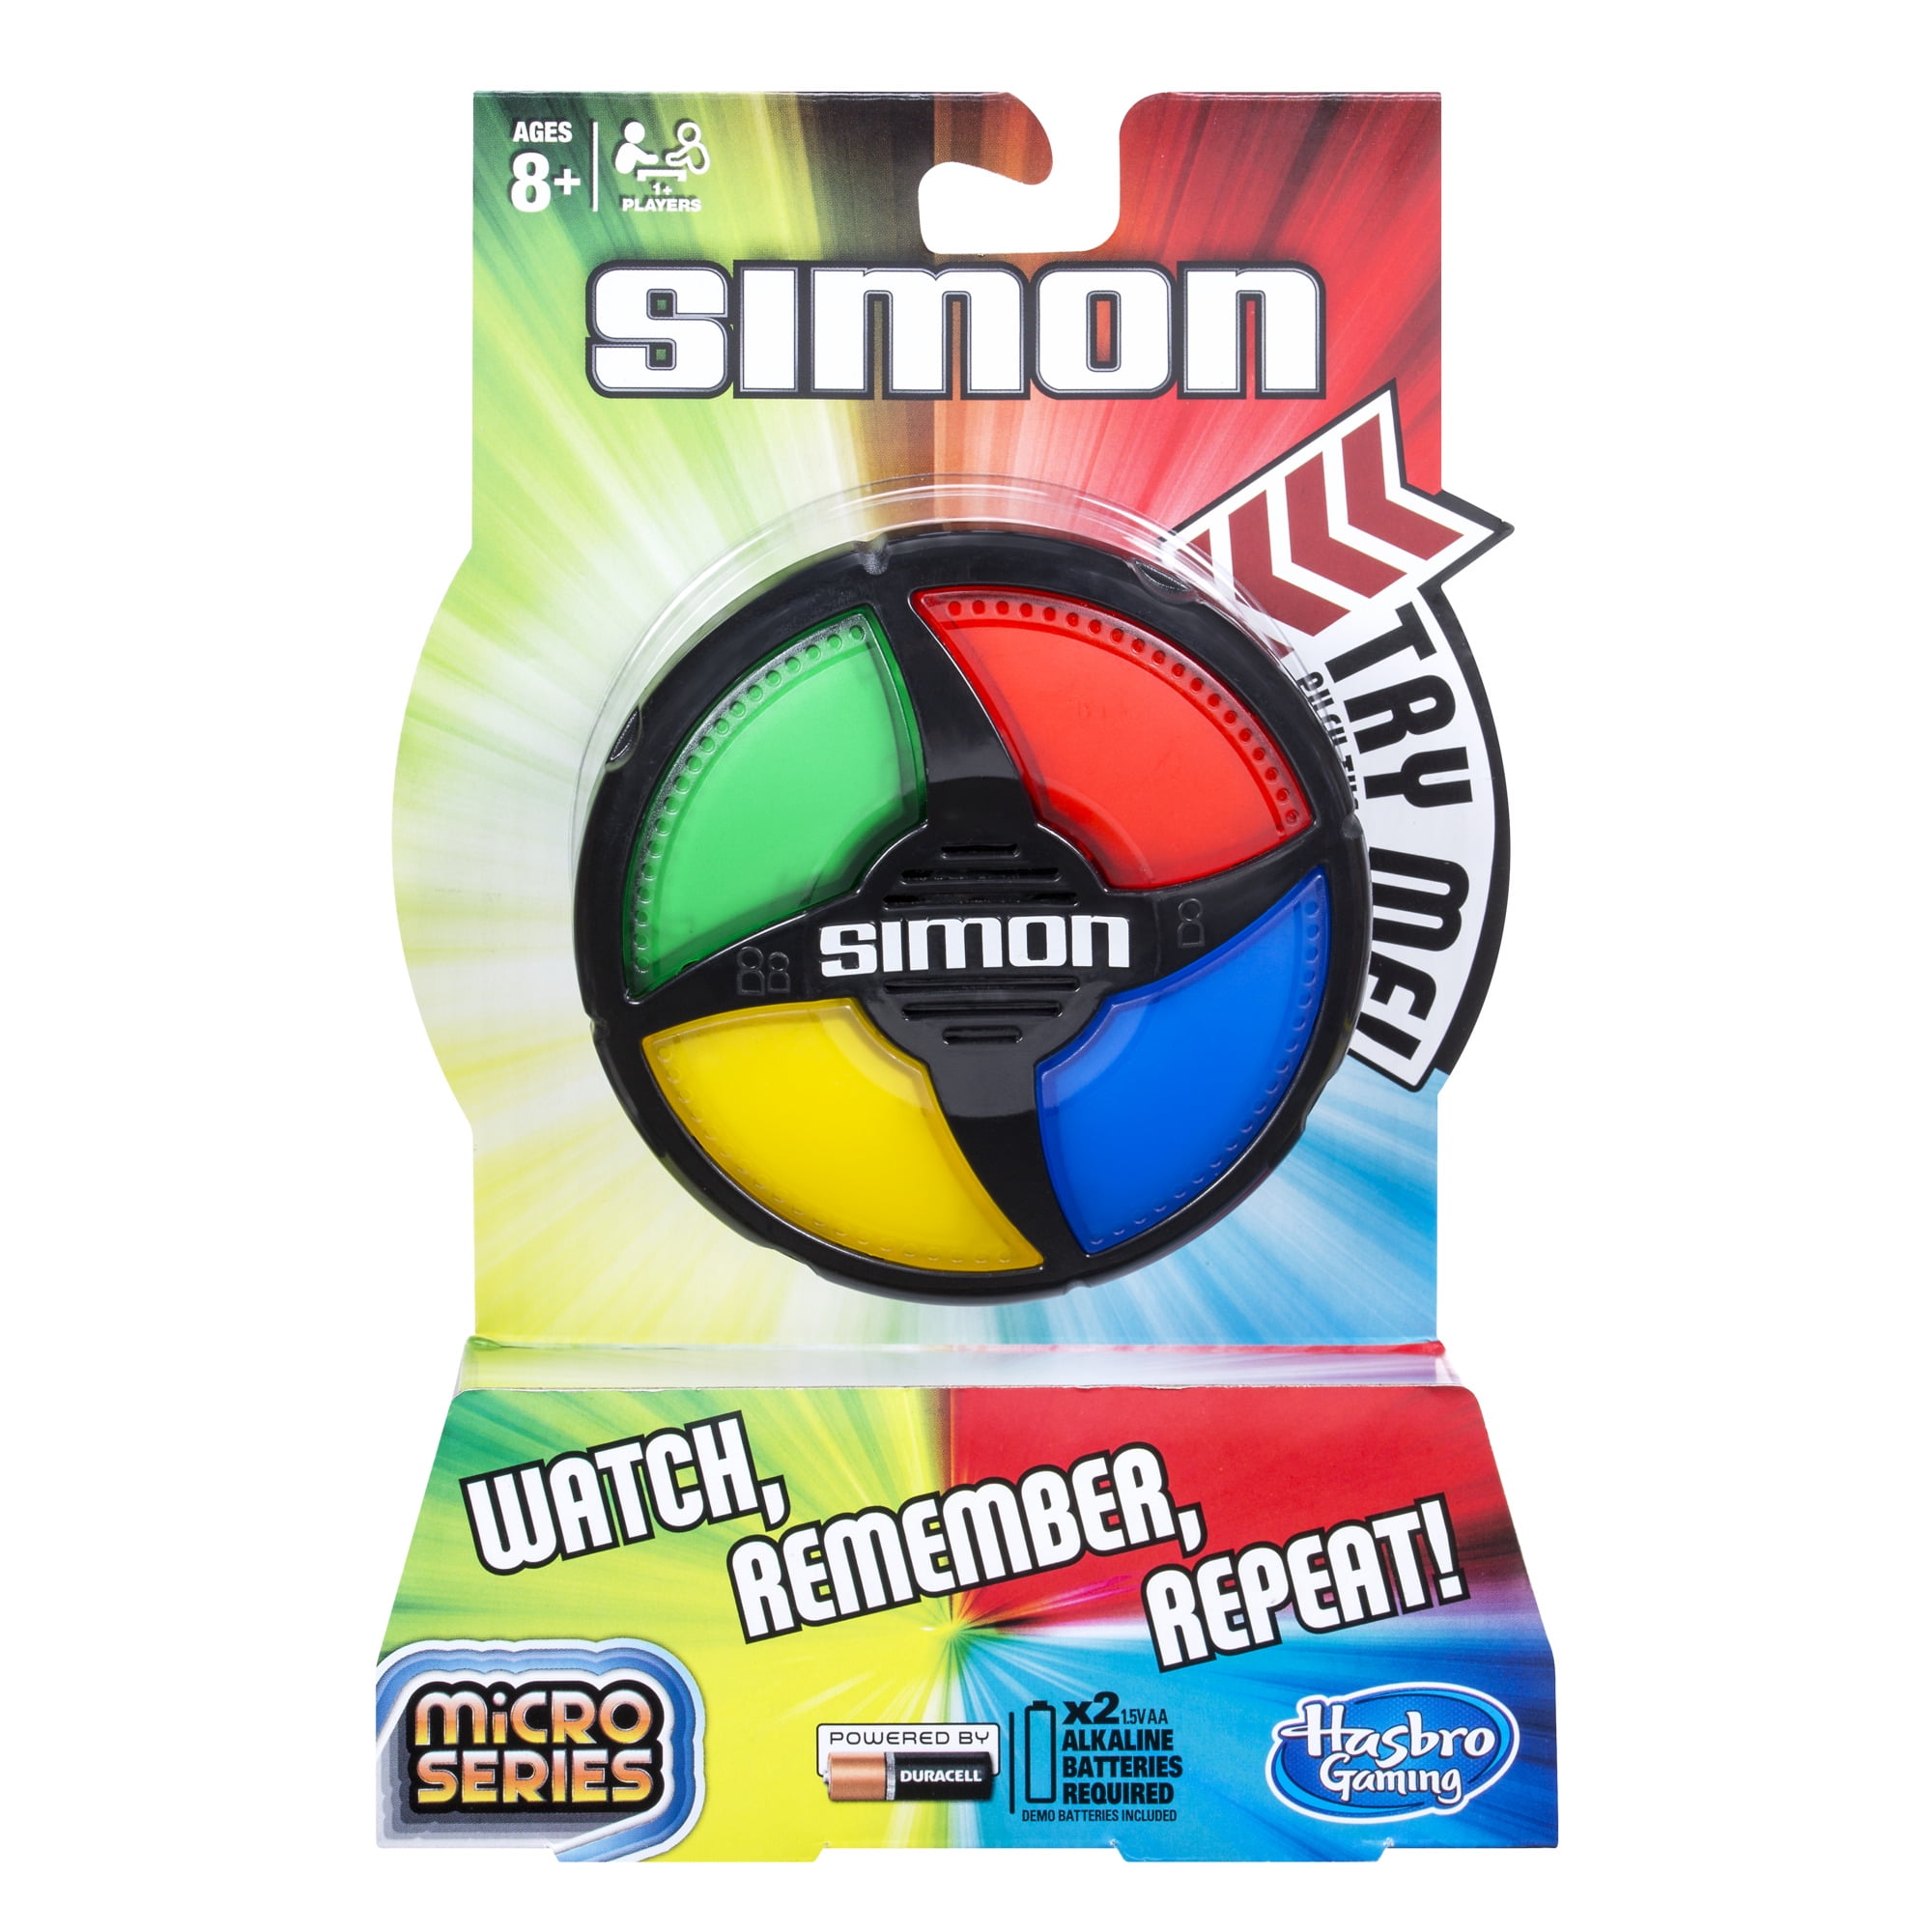 Simon Micro Series Electronic Game, Classic Simon Board Game in a Compact Size